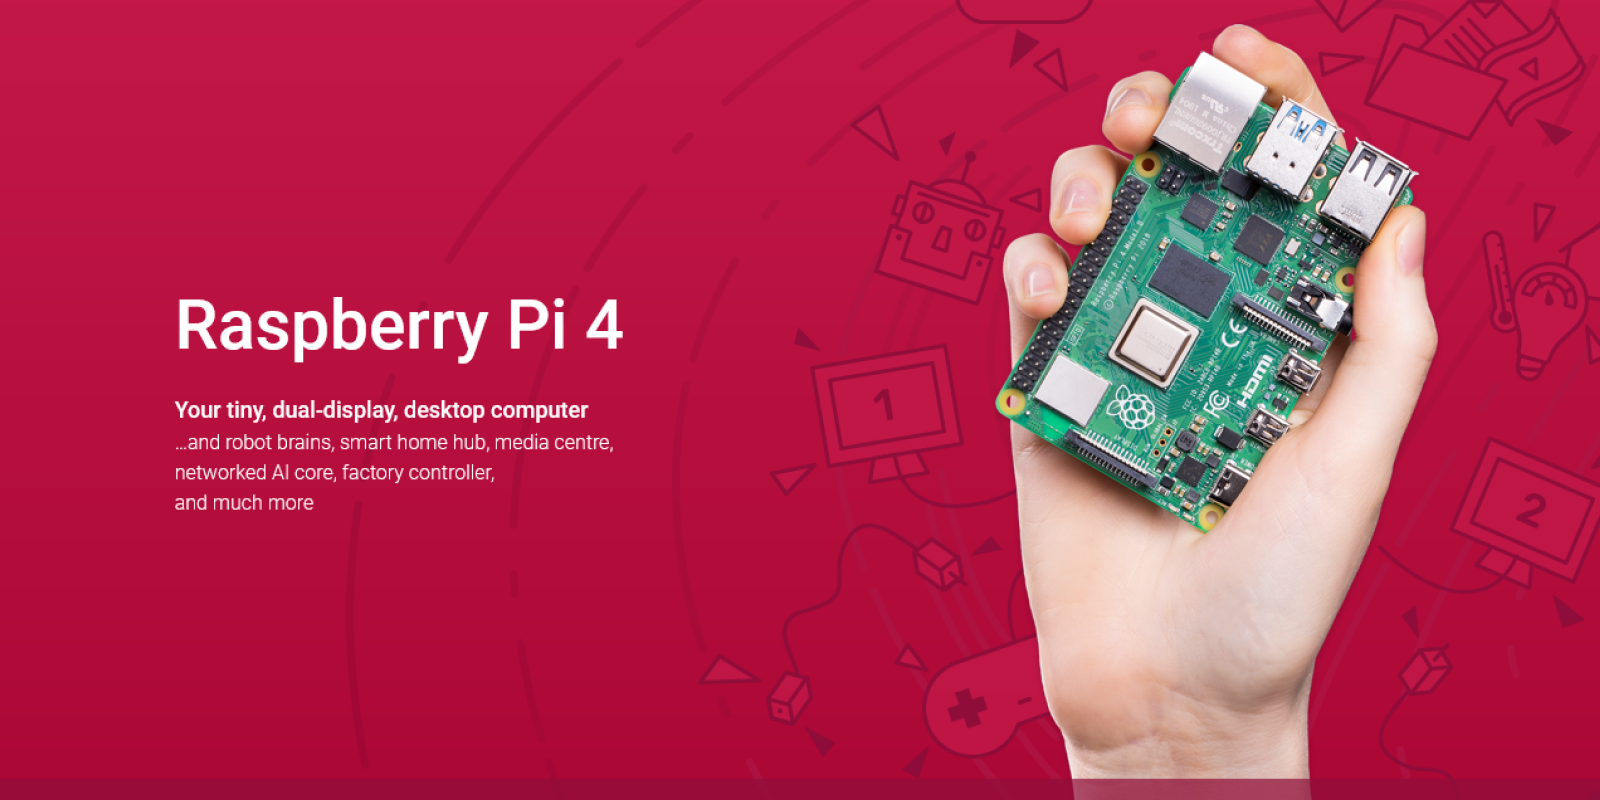 The all new Raspberry Pi 4b